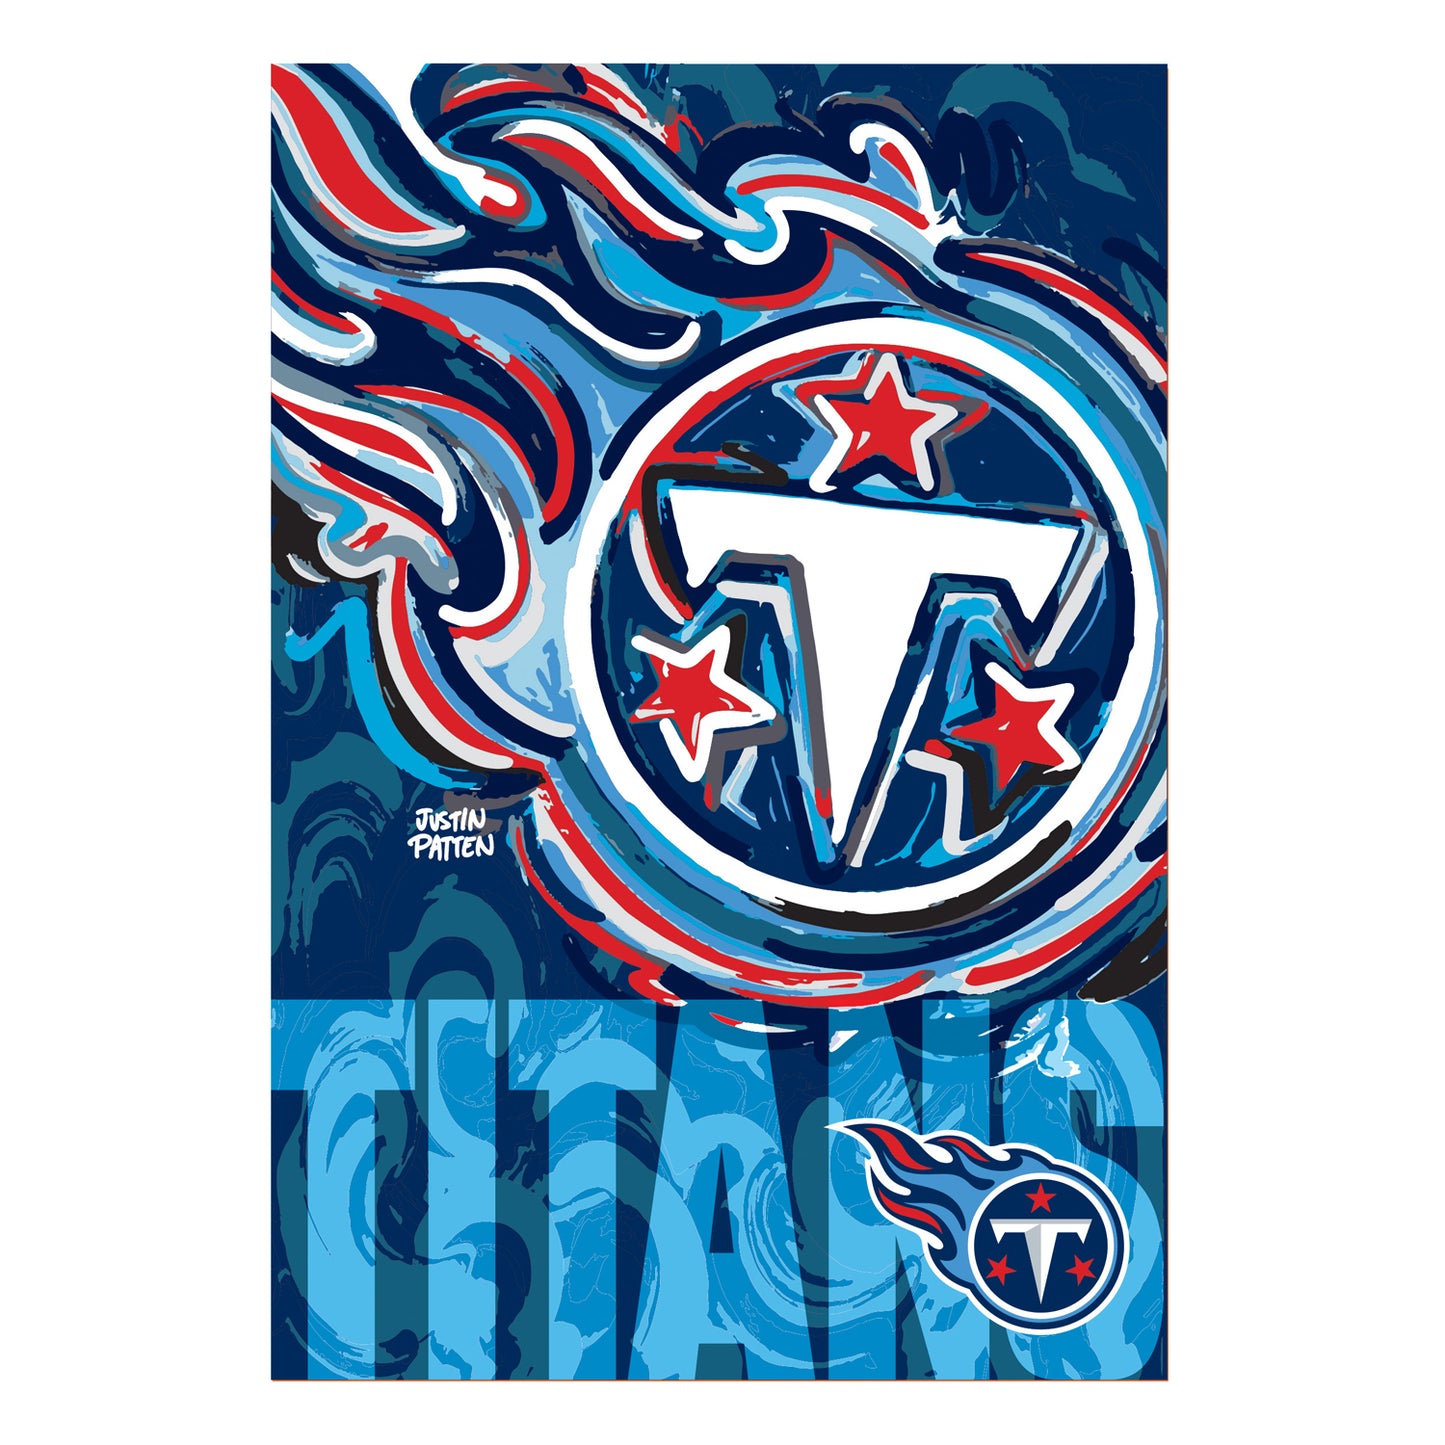 Tennessee Titans Garden Flag 12" x 18" by Justin Patten